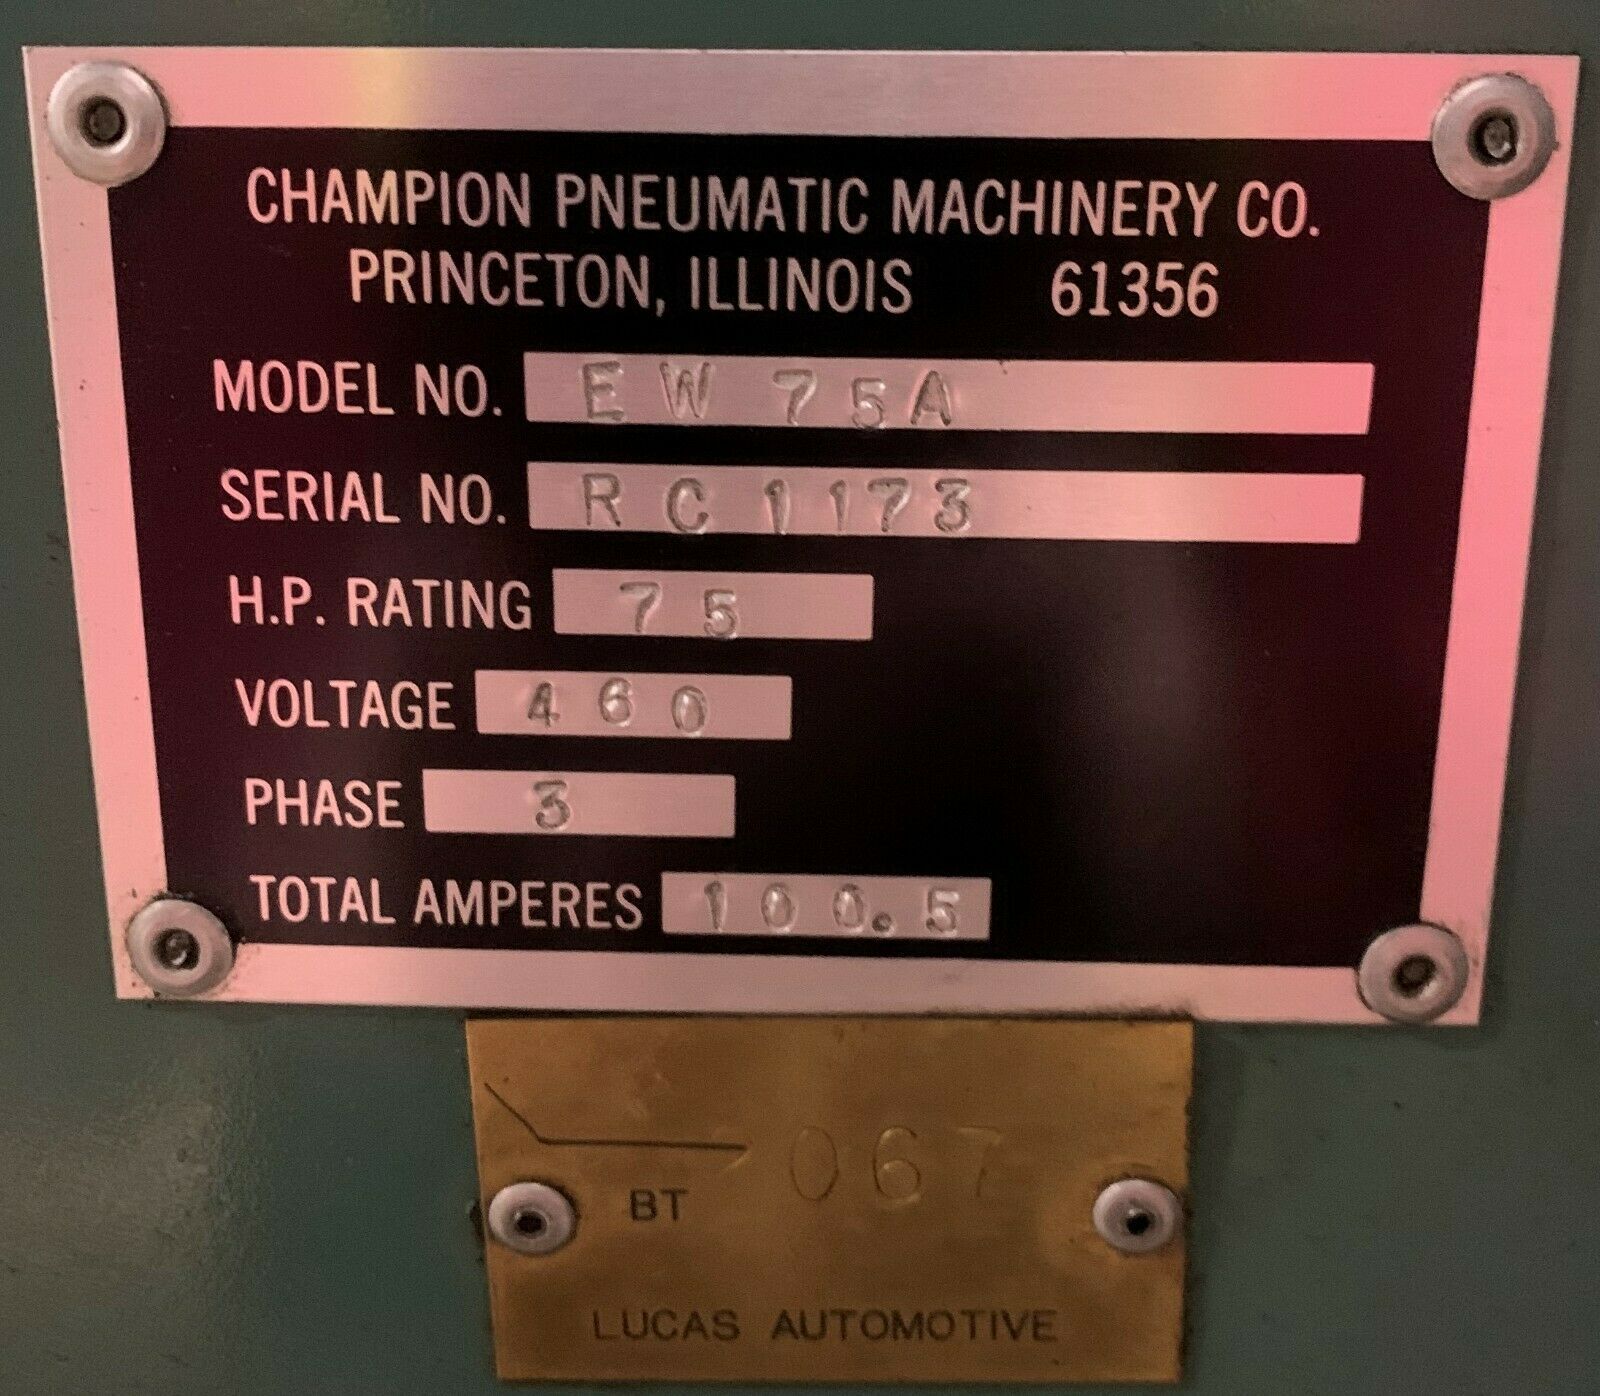 CHAMPION PNEUMATIC MACHINERY EW-75A Compressors and Generators | ESS INDUSTRIAL